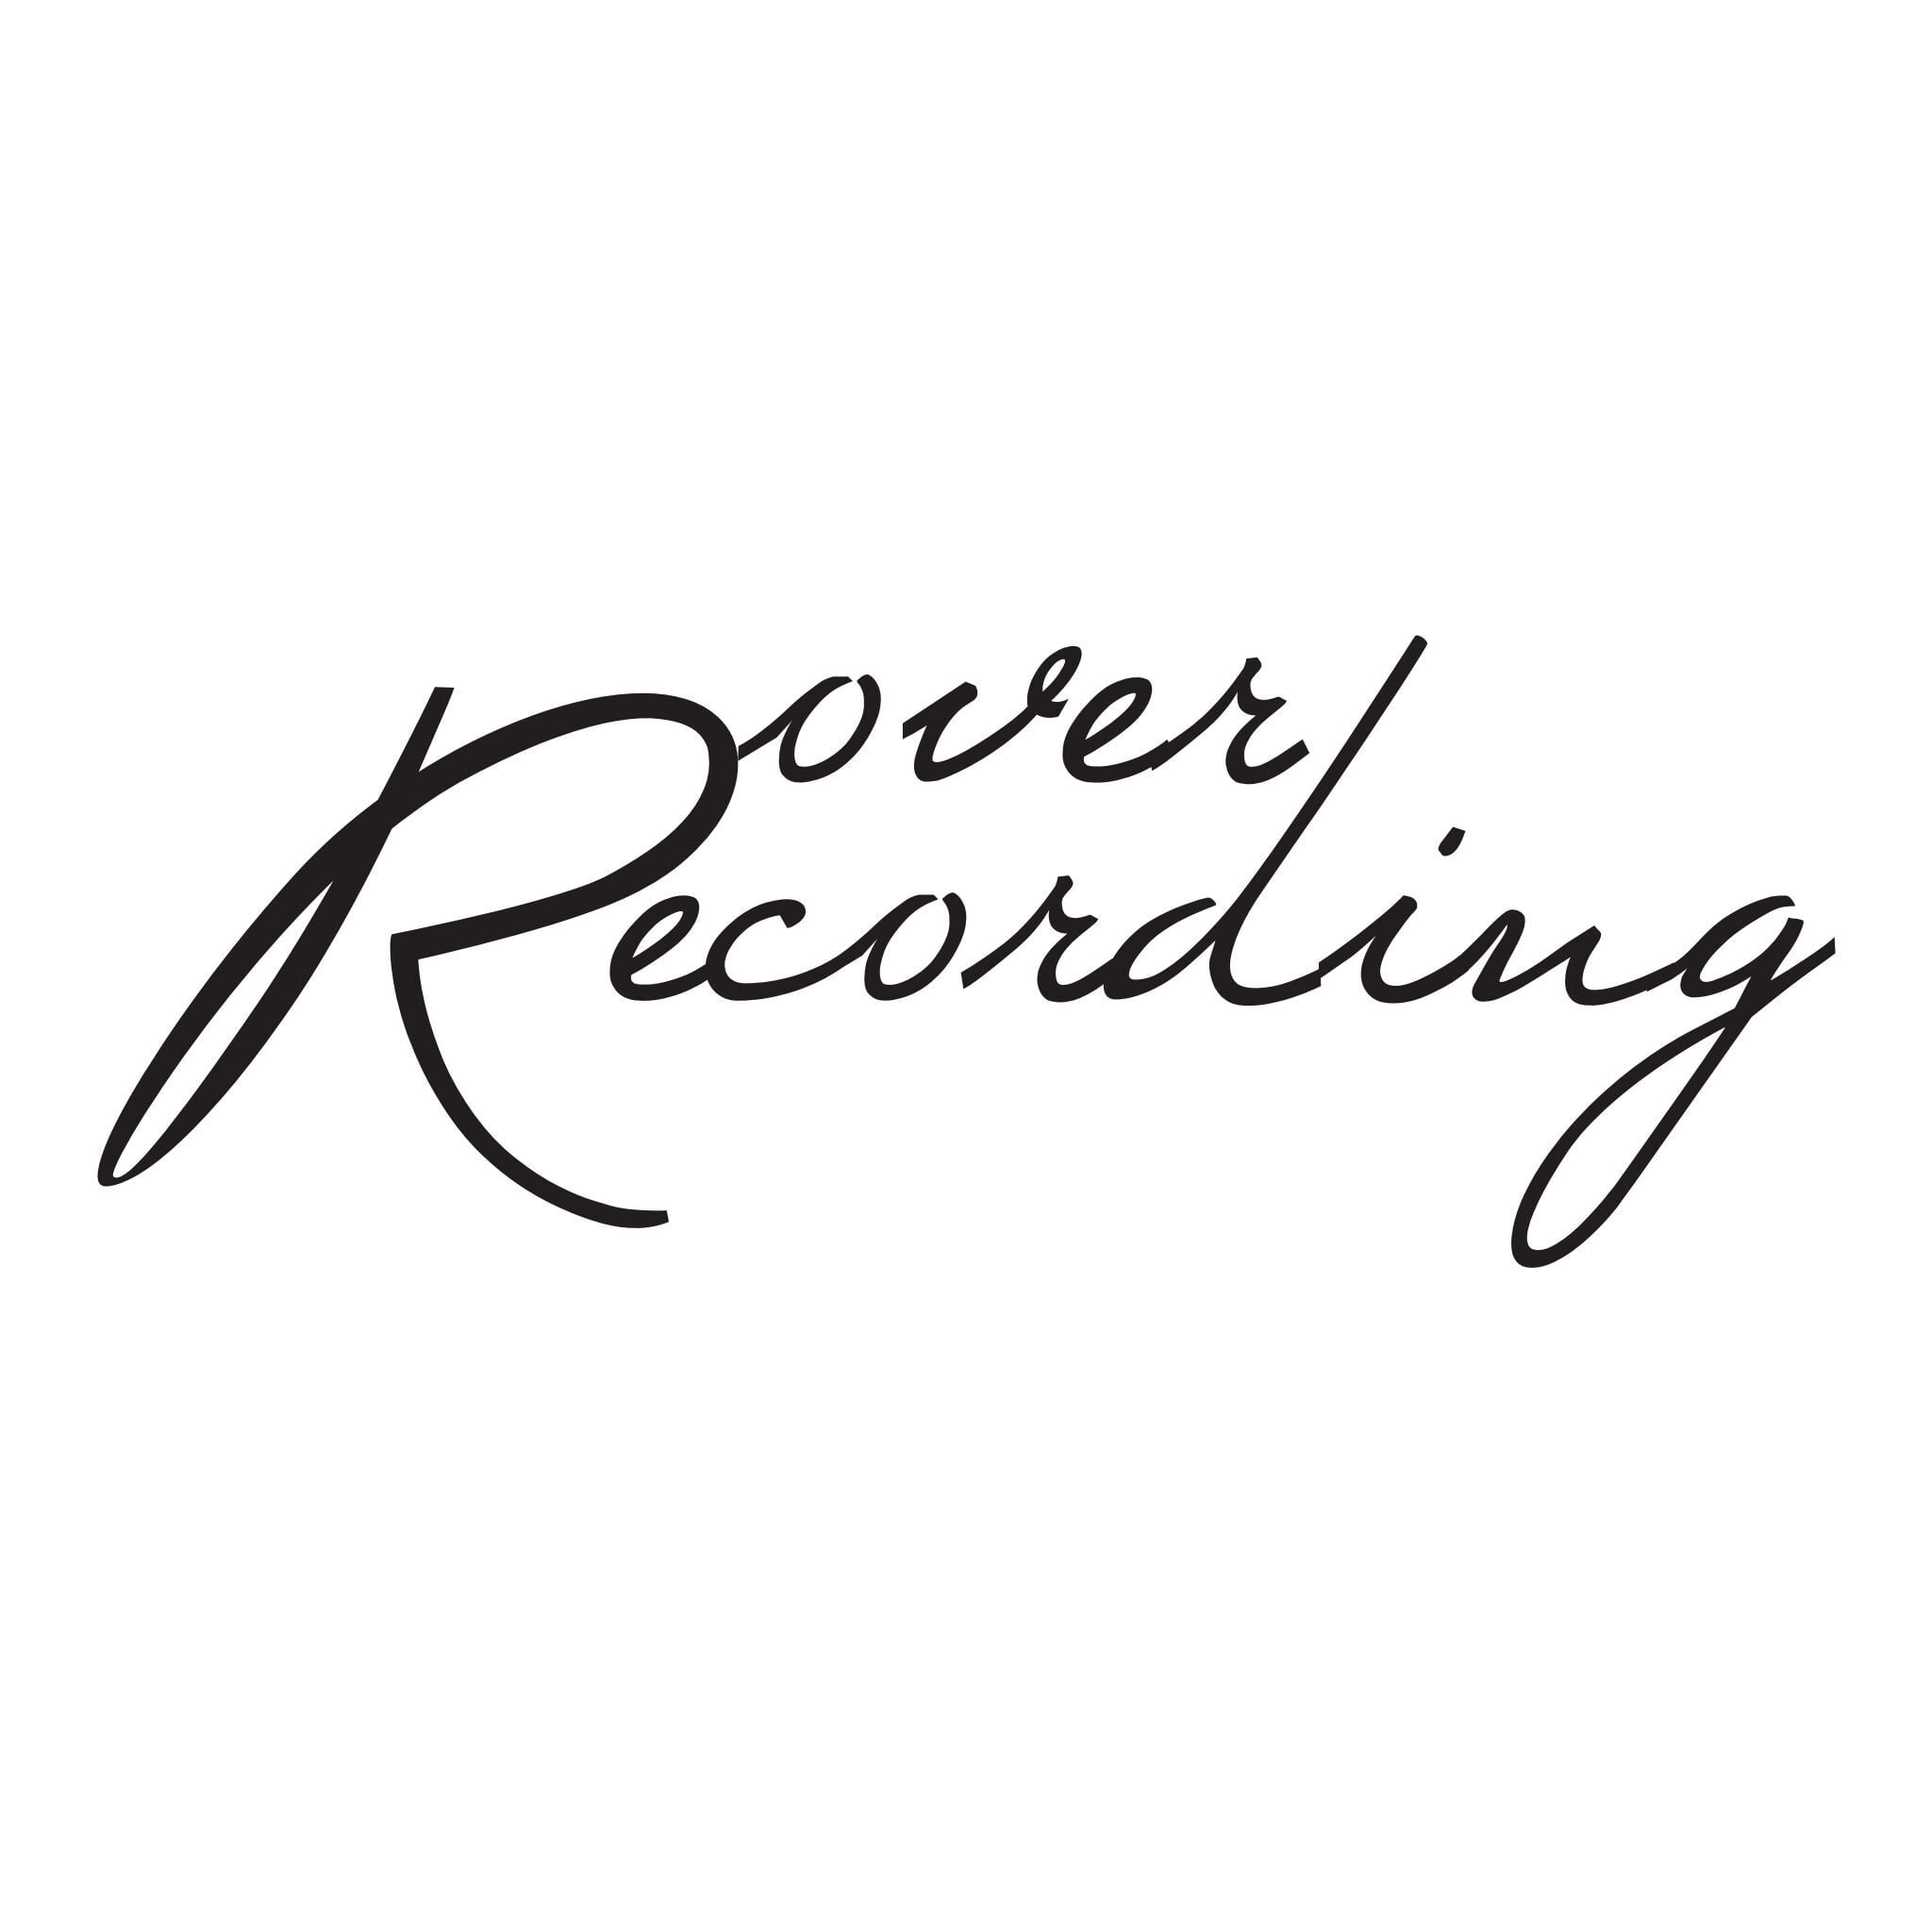 Rover Recordings